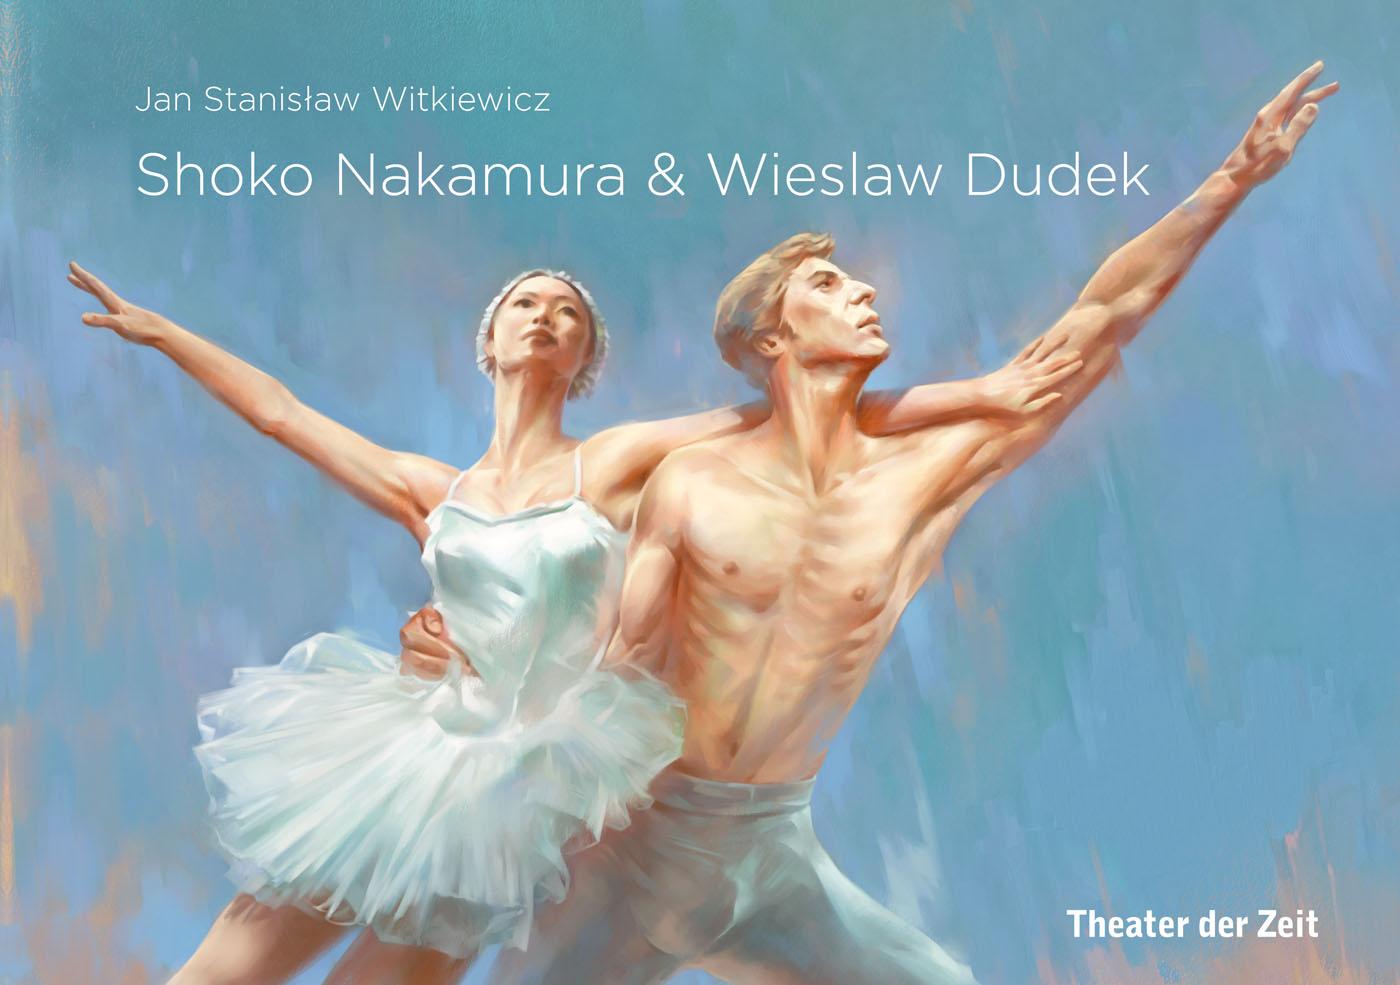 "Shoko Nakamura & Wieslaw Dudek"